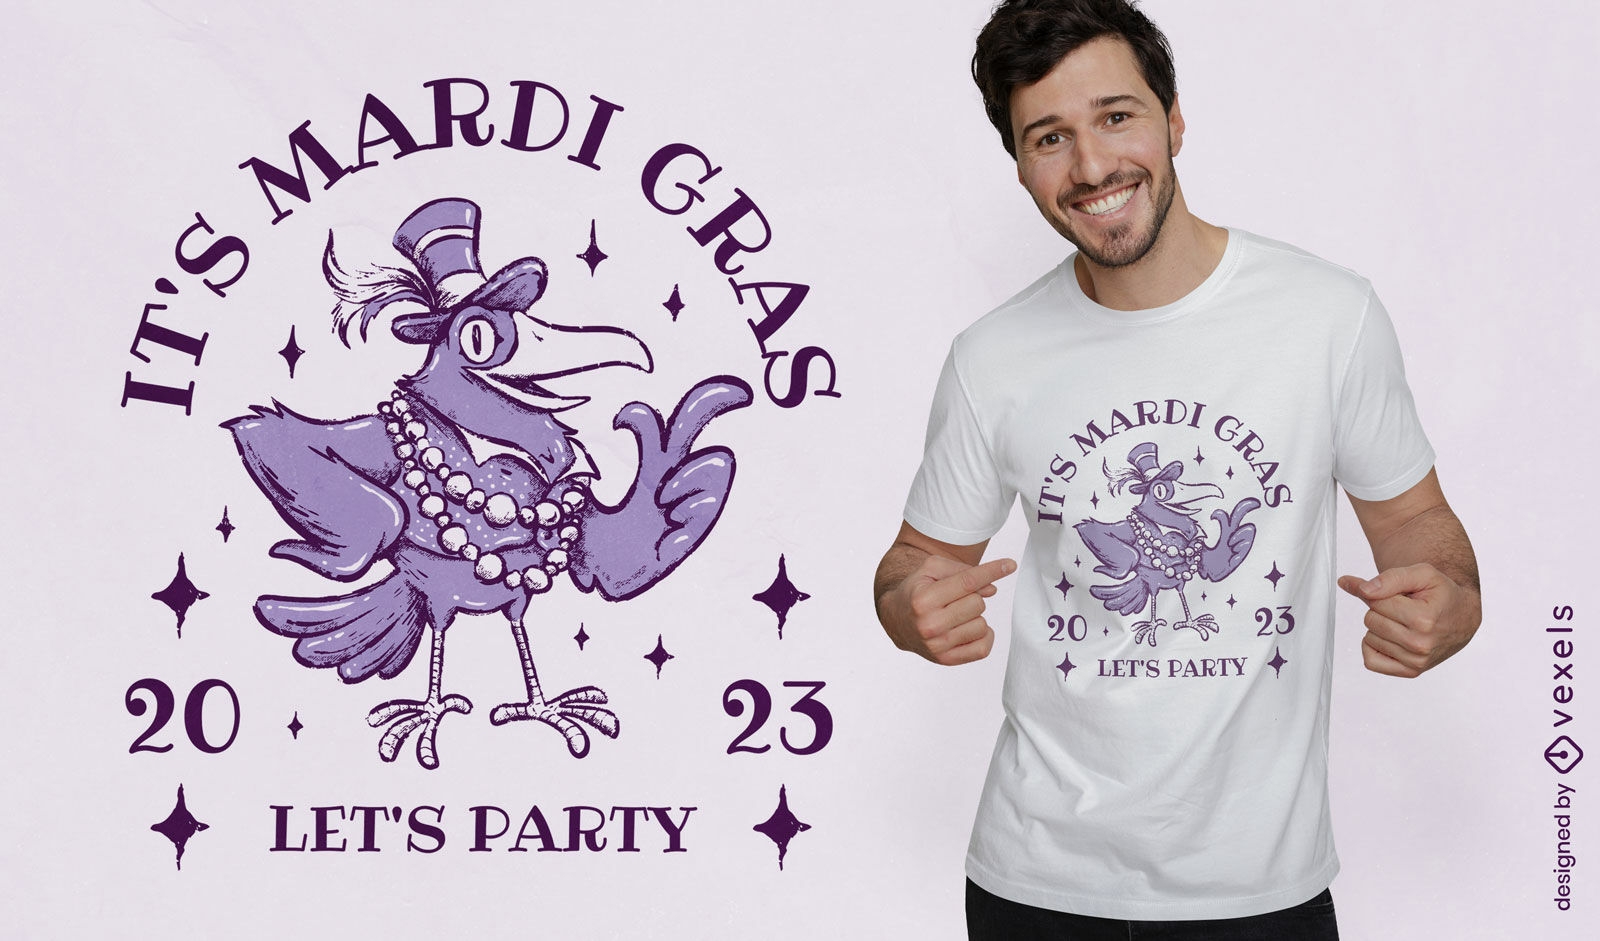 Pássaro de Mardi gras comemorando design de camiseta